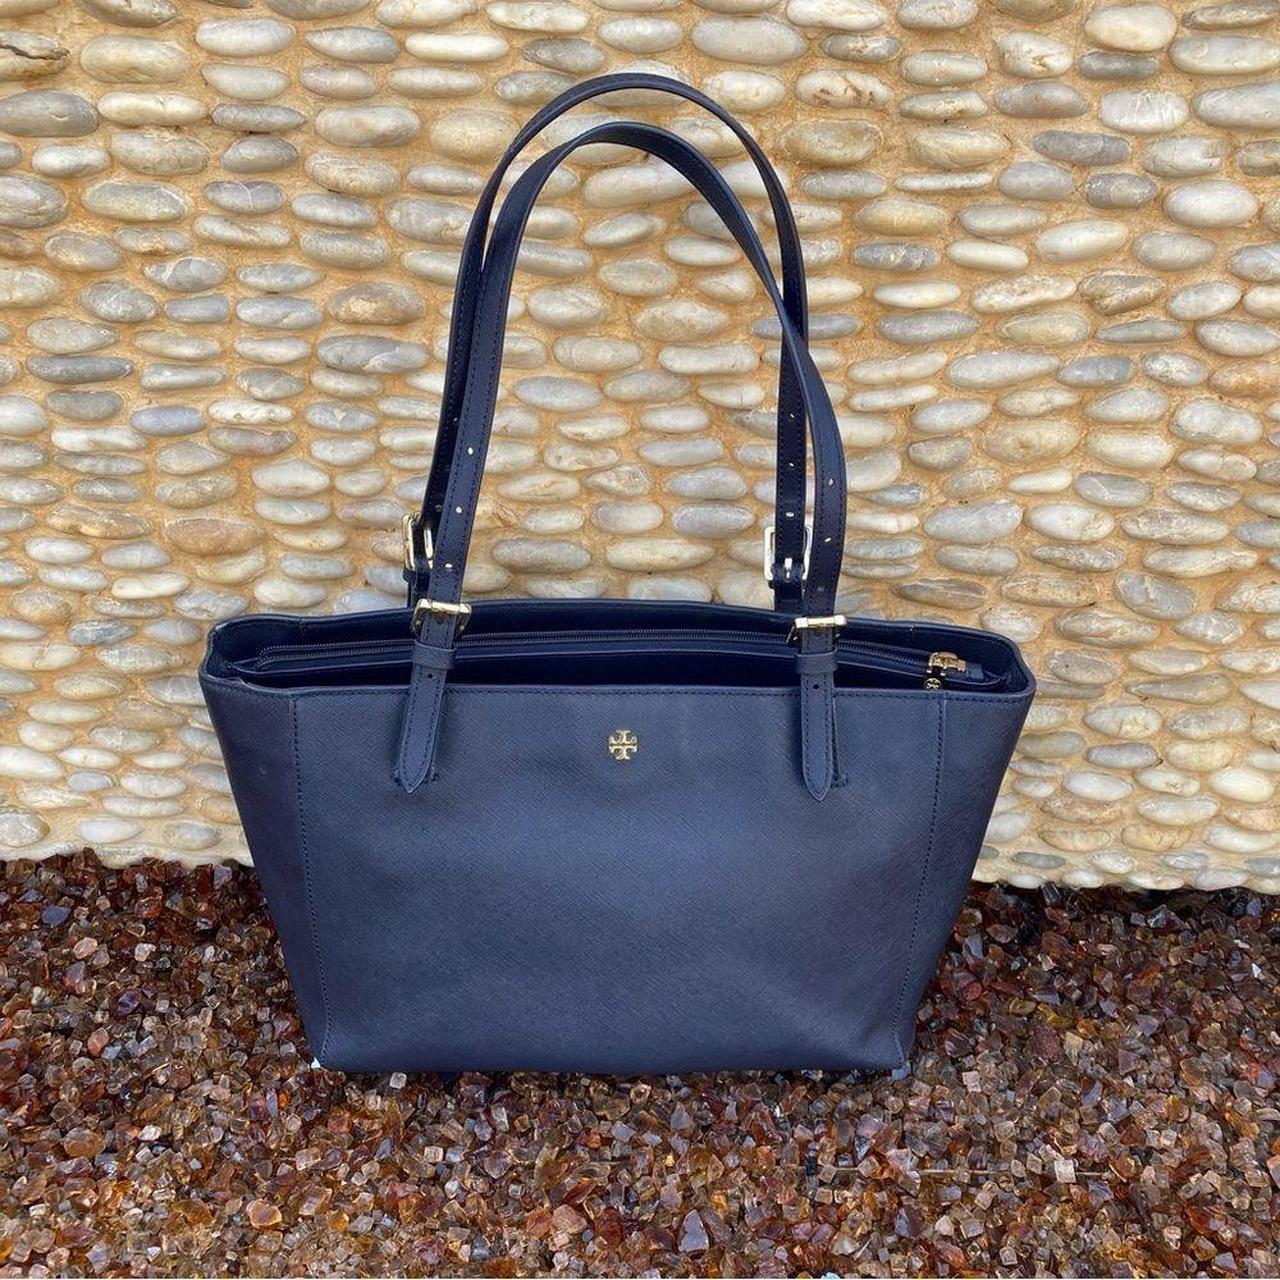 Buy TORY BURCH Women Blue Handbag Blue Online @ Best Price in India |  Flipkart.com